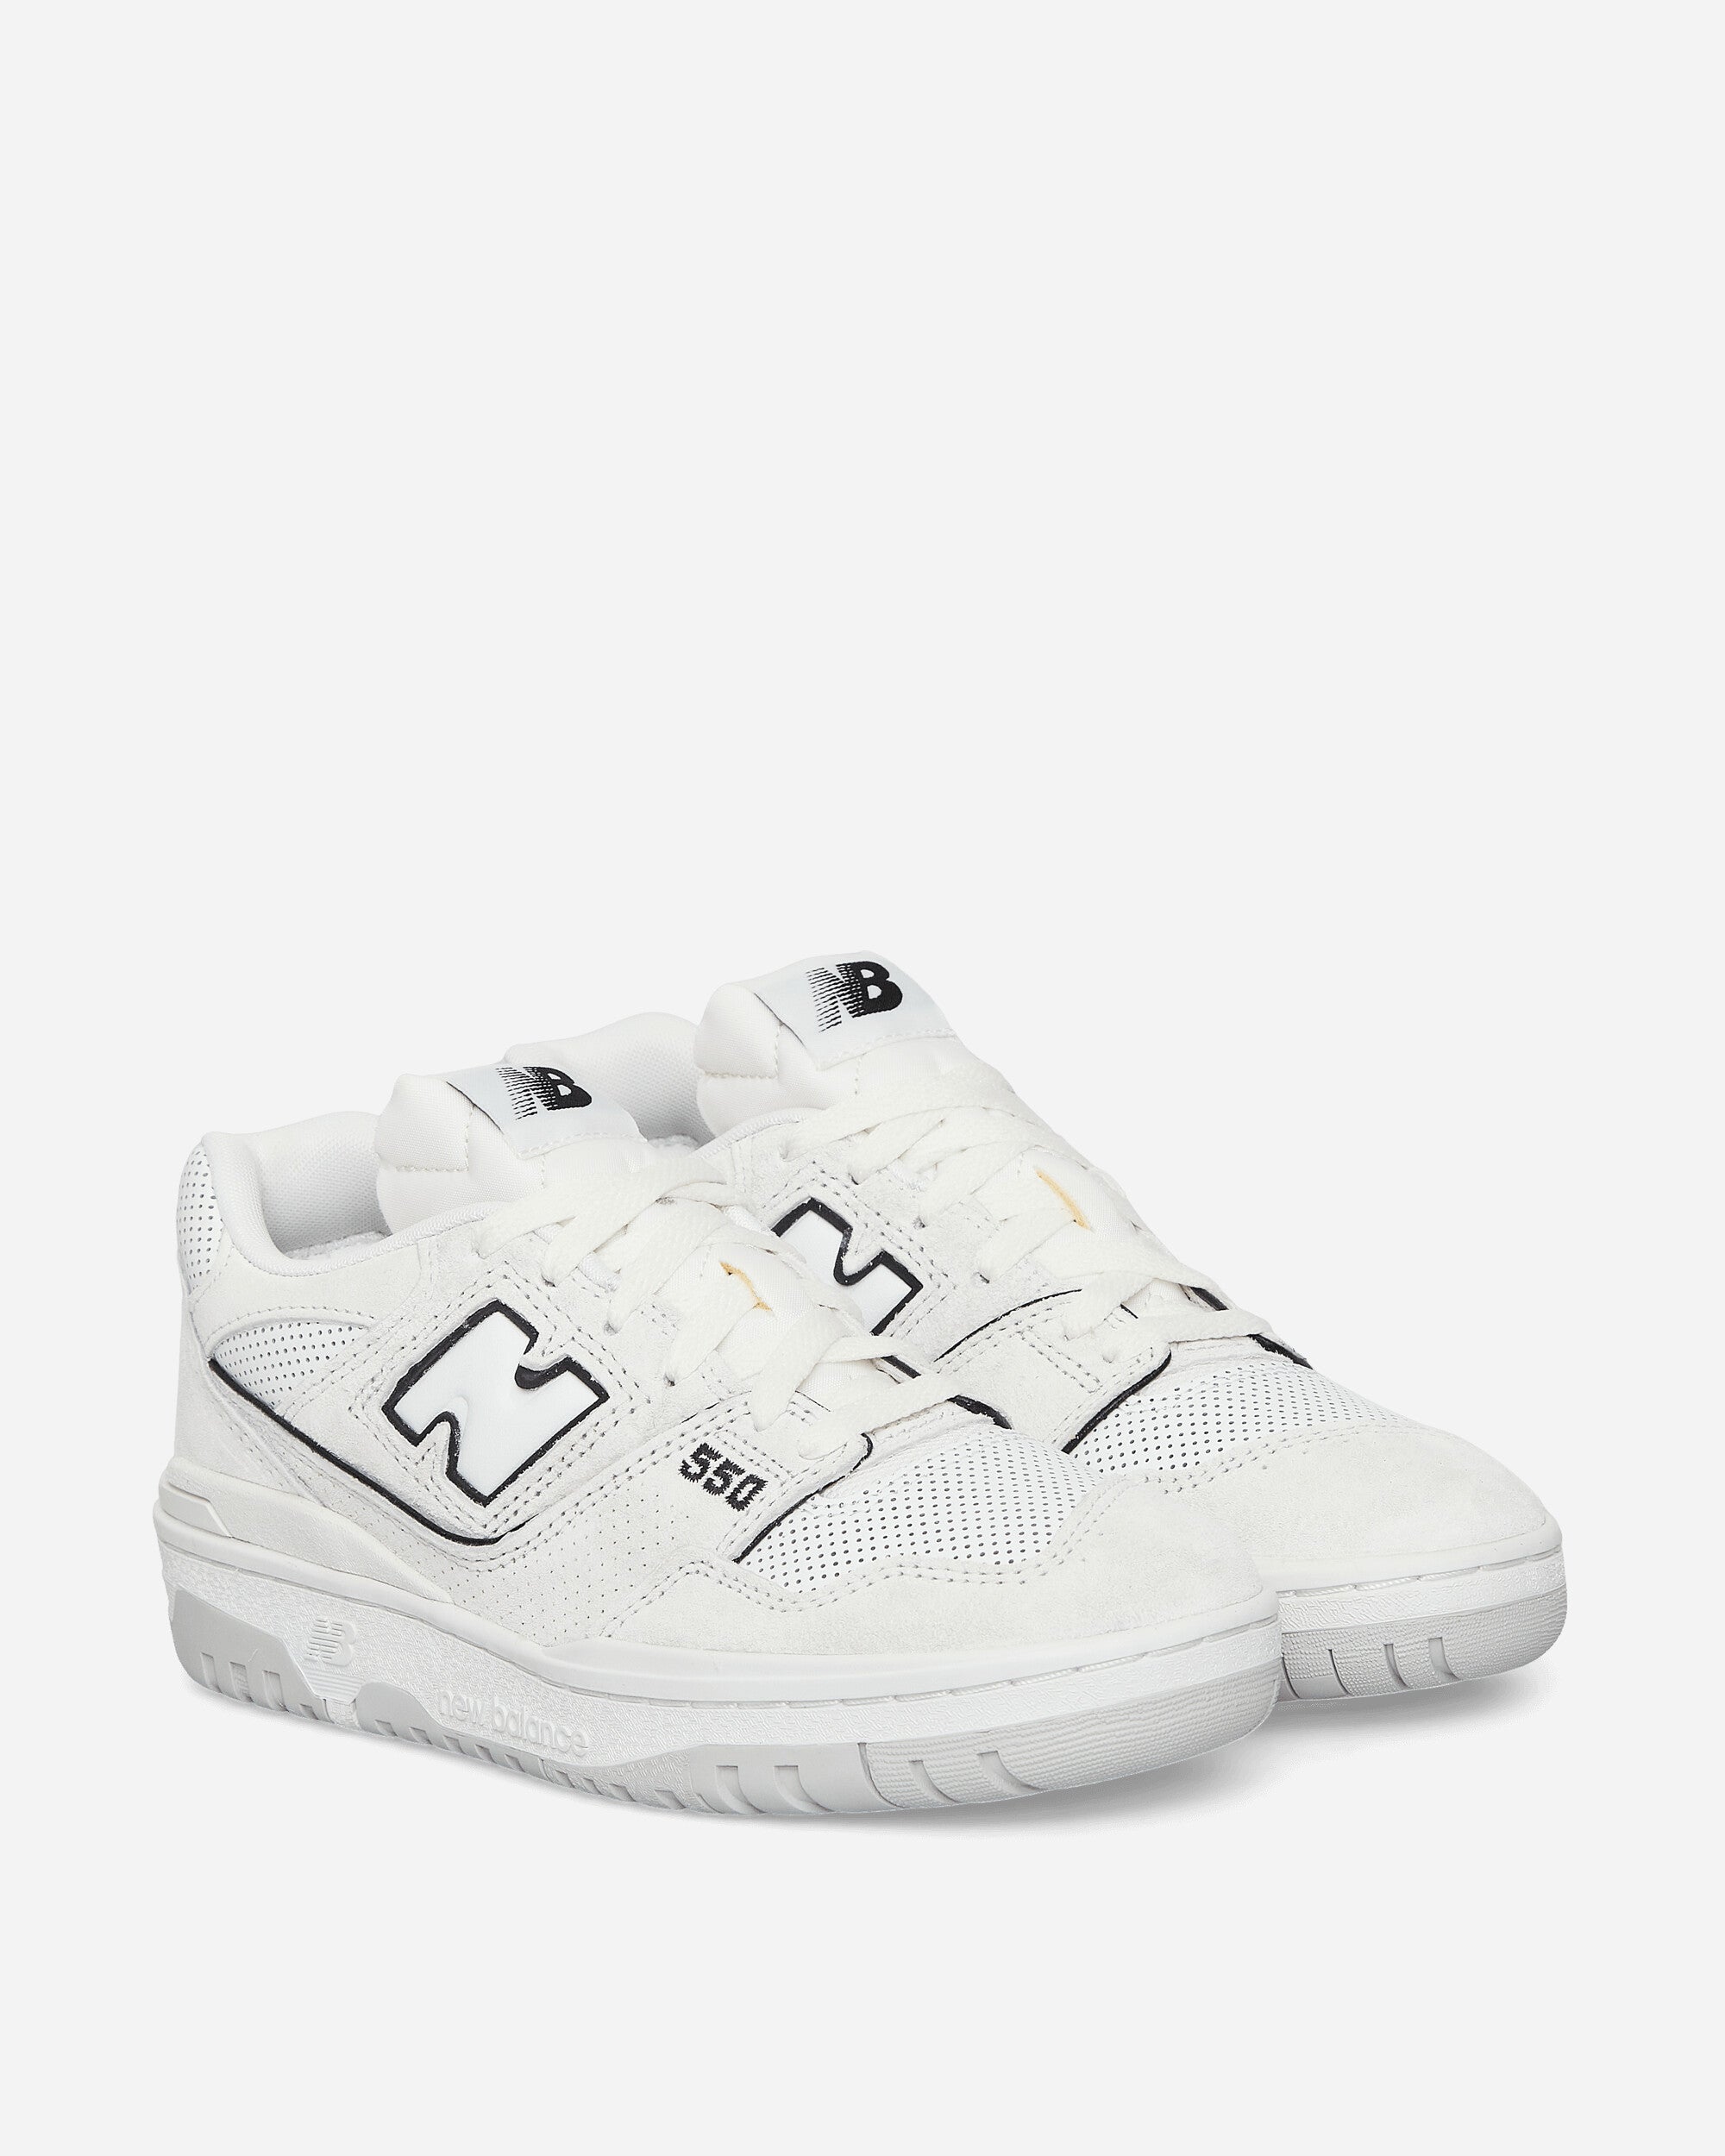 550 Sneakers Reflection / White / Black